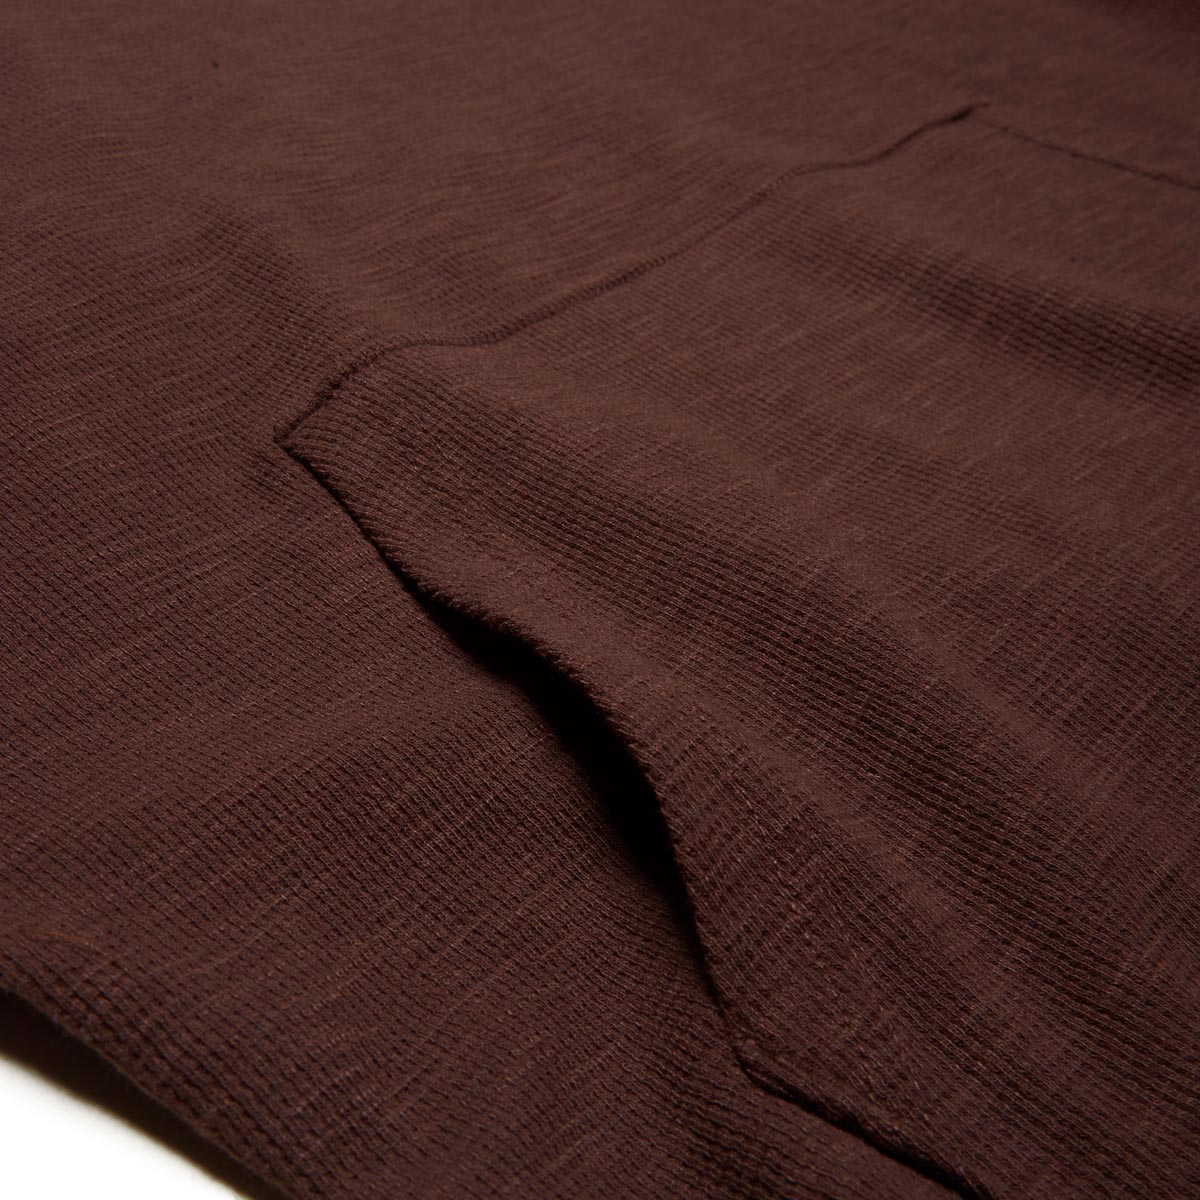 Volcom Murph Thermal Long Sleeve Shirt - Pumice image 3